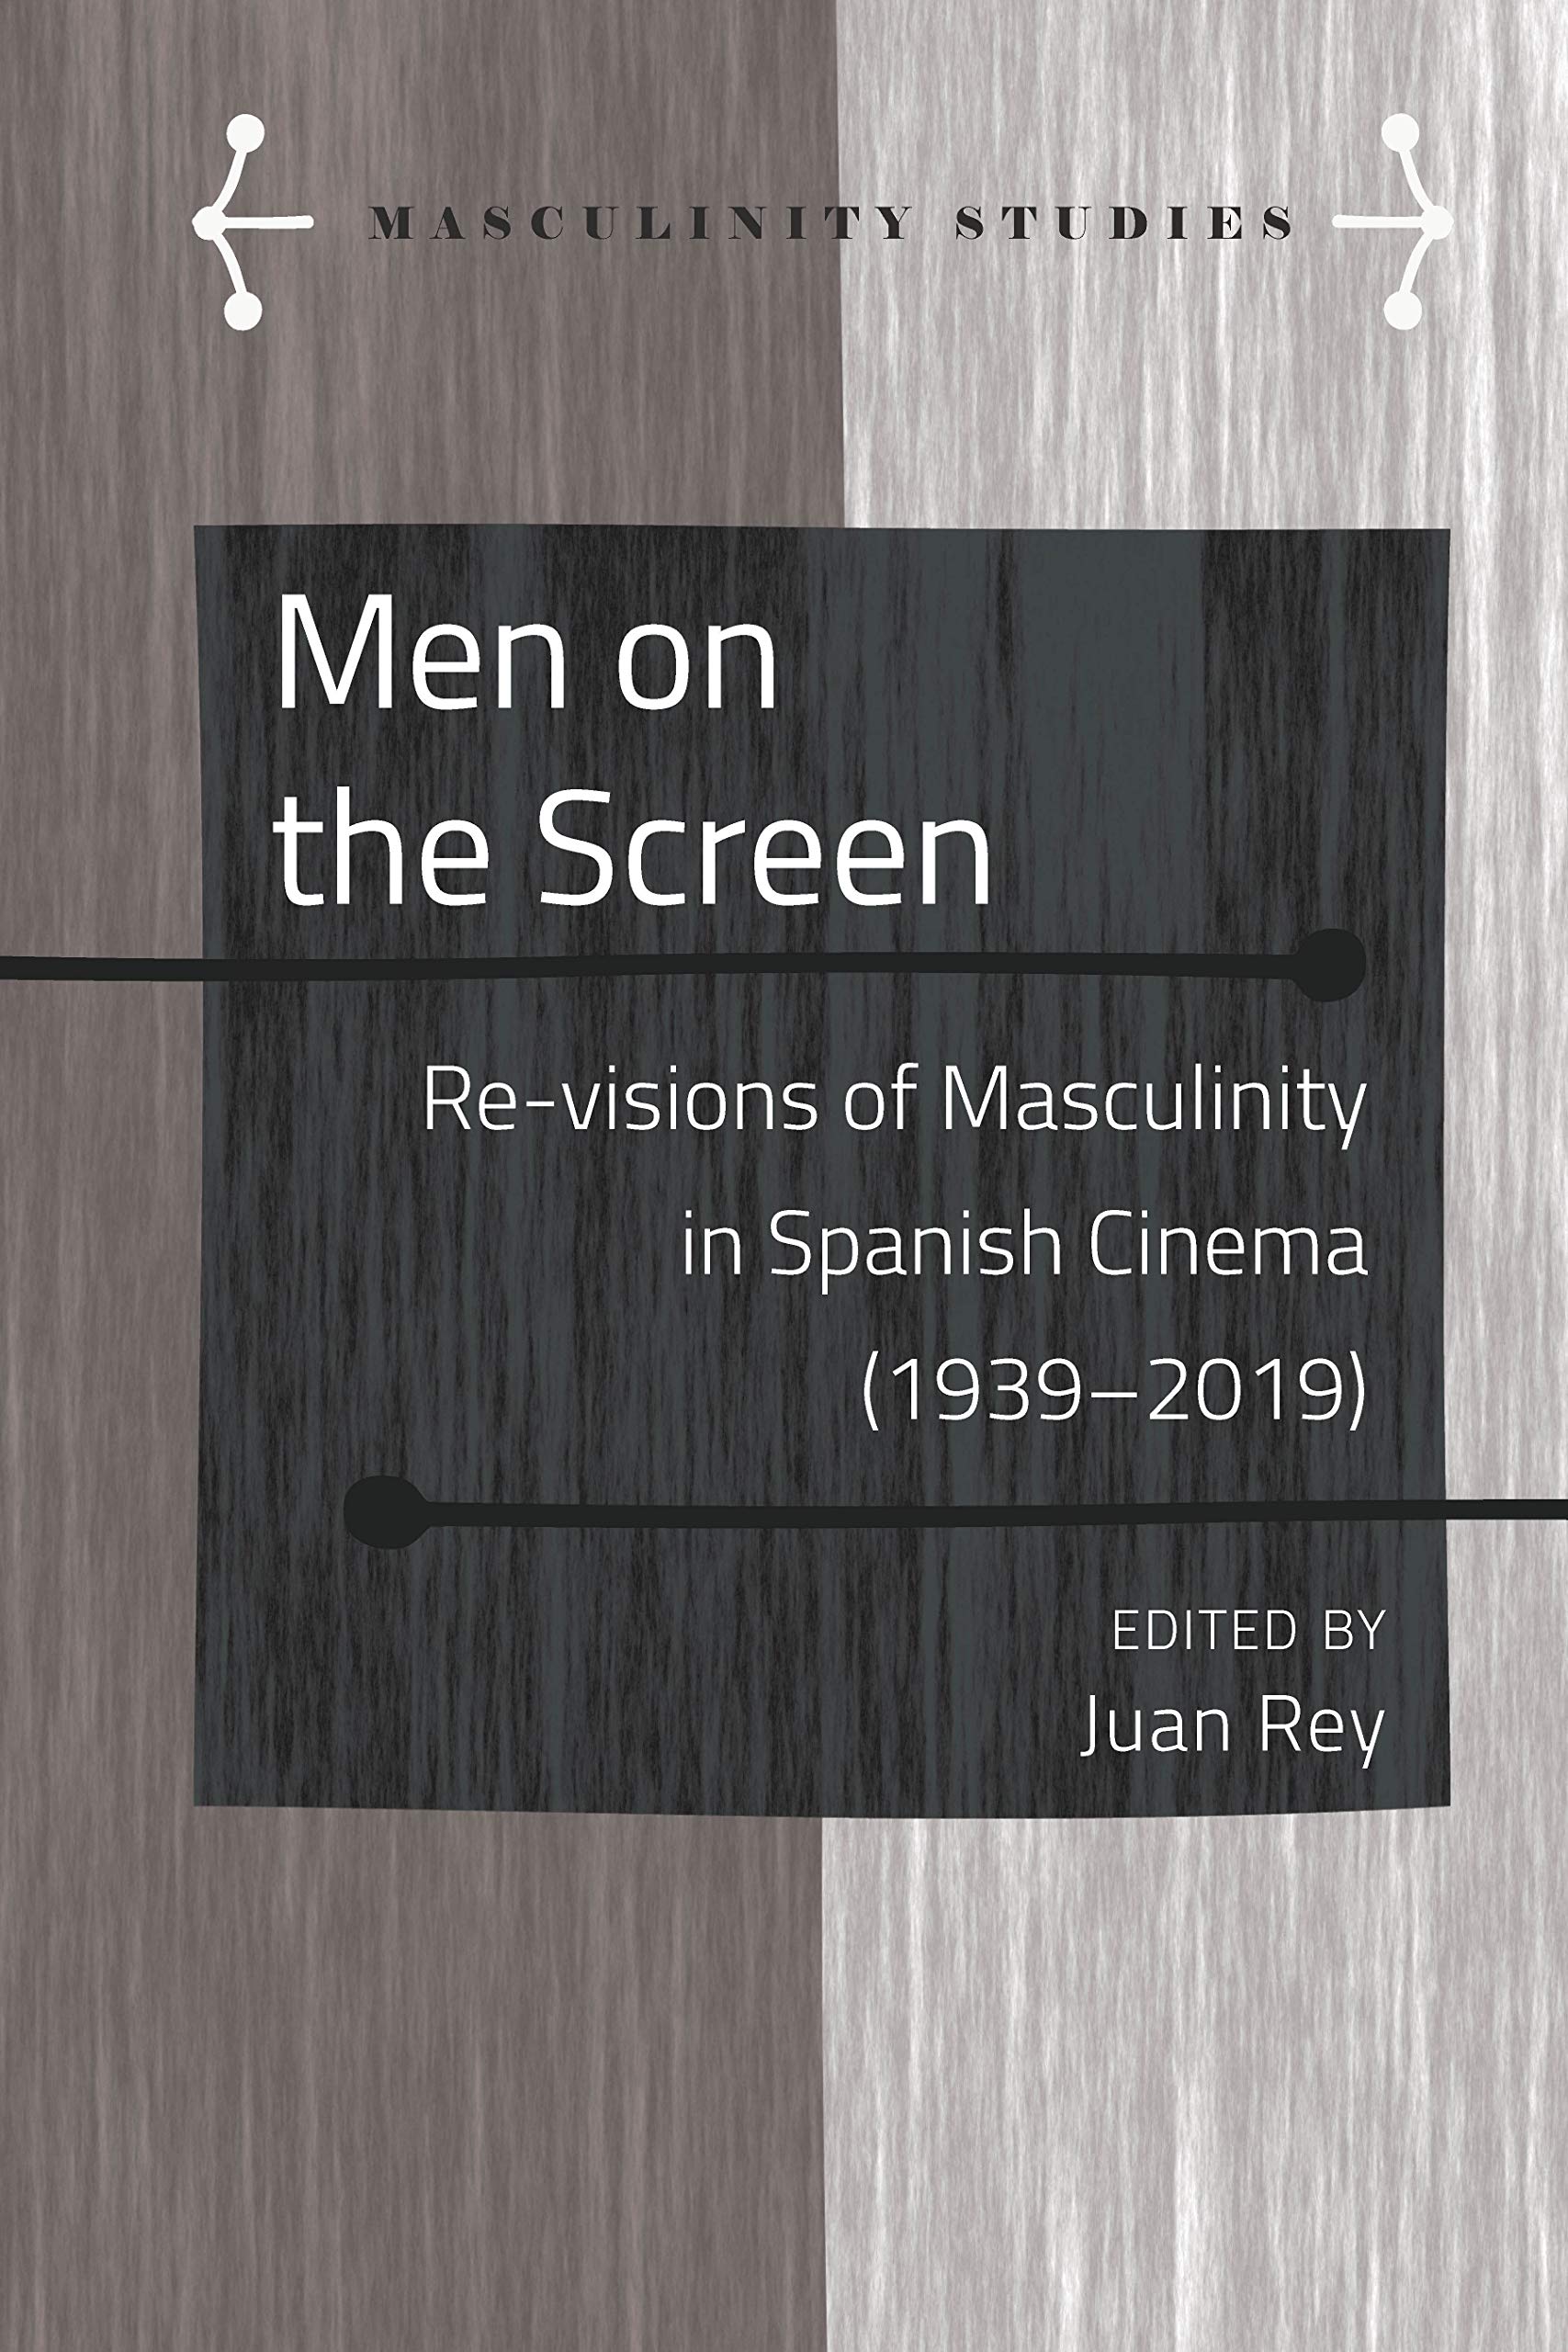 Imagen de portada del libro Men on the Screen